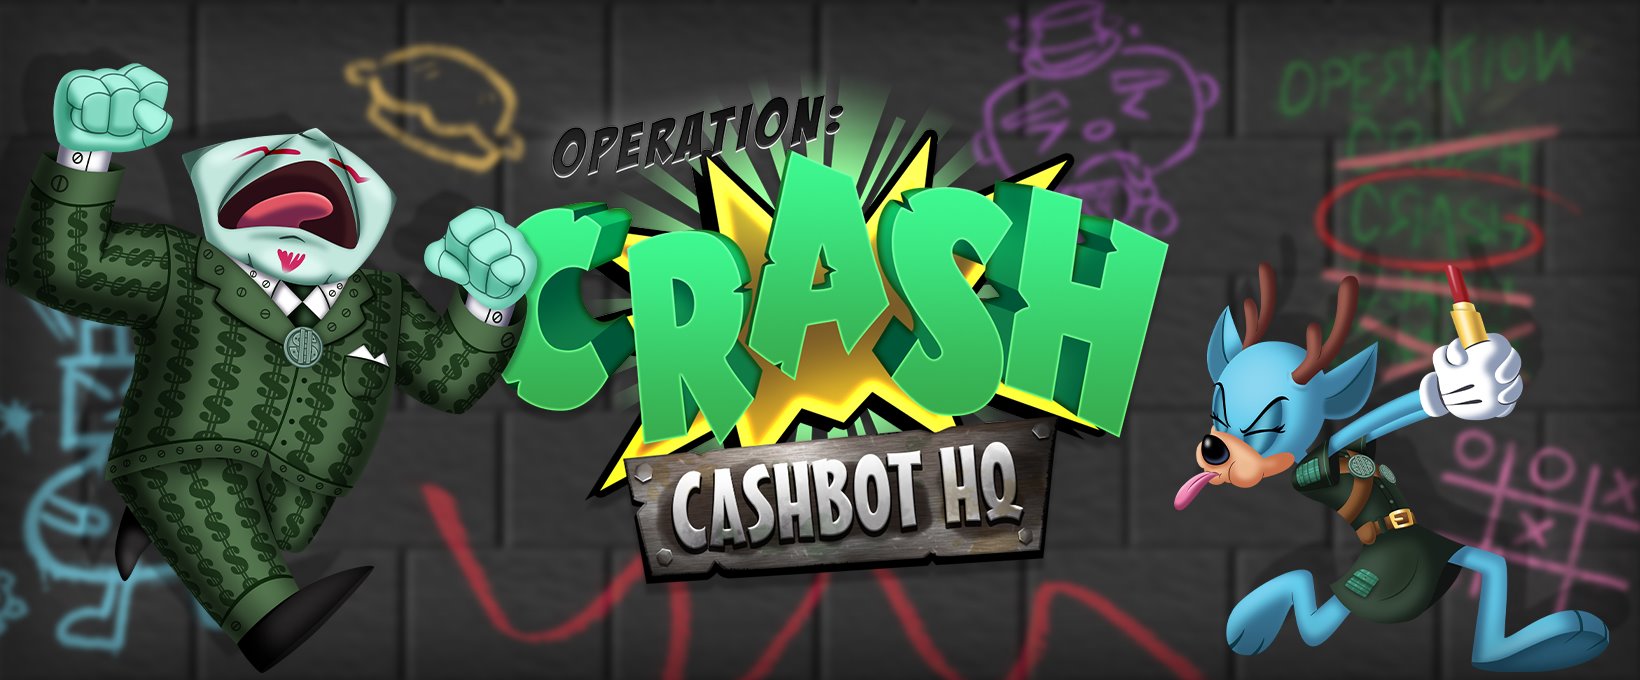 Operation: Crash Cashbot Headquarters banner.